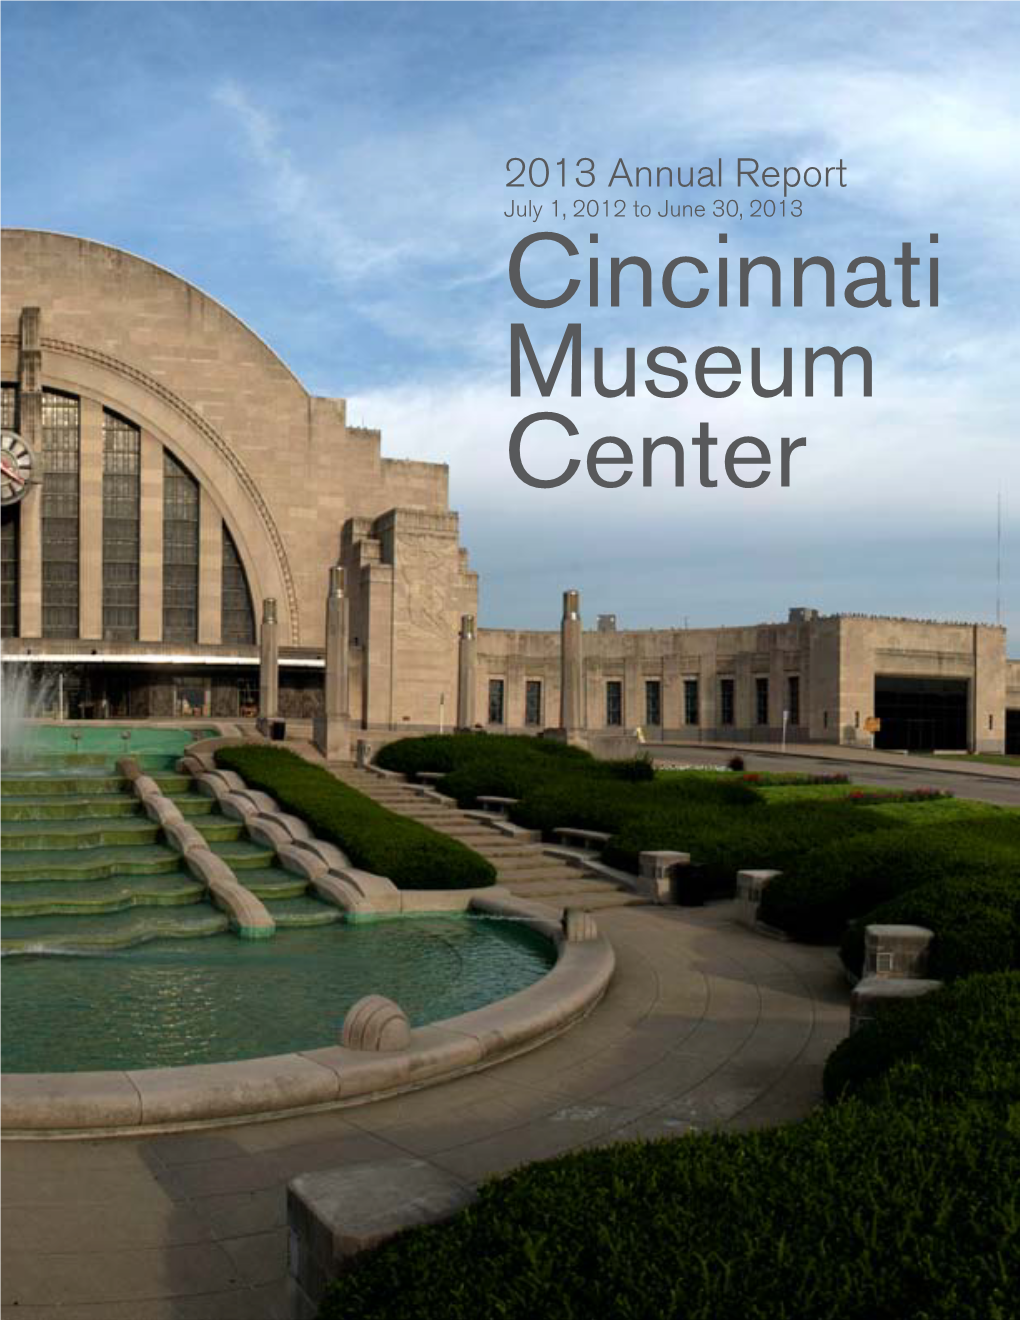 Cincinnati Museum Center Looking at What’S Inside